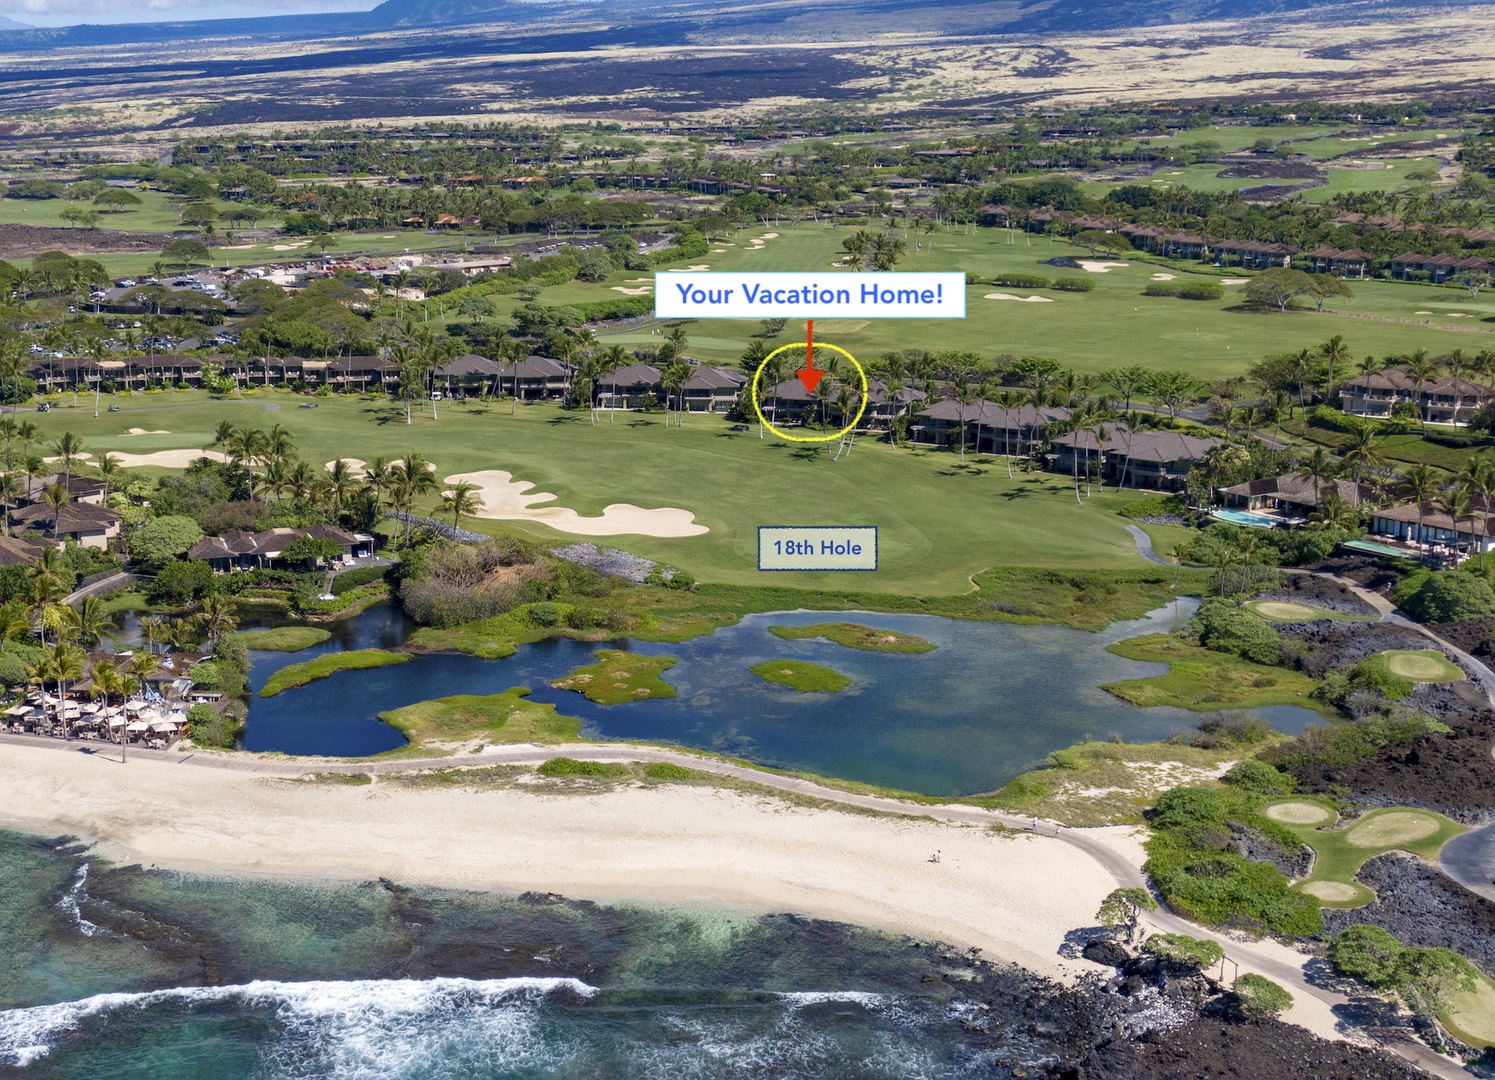 Kailua Kona Vacation Rentals, 3BD Golf Villa (3101) at Four Seasons Resort at Hualalai - Map of your front row luxury accommodations.